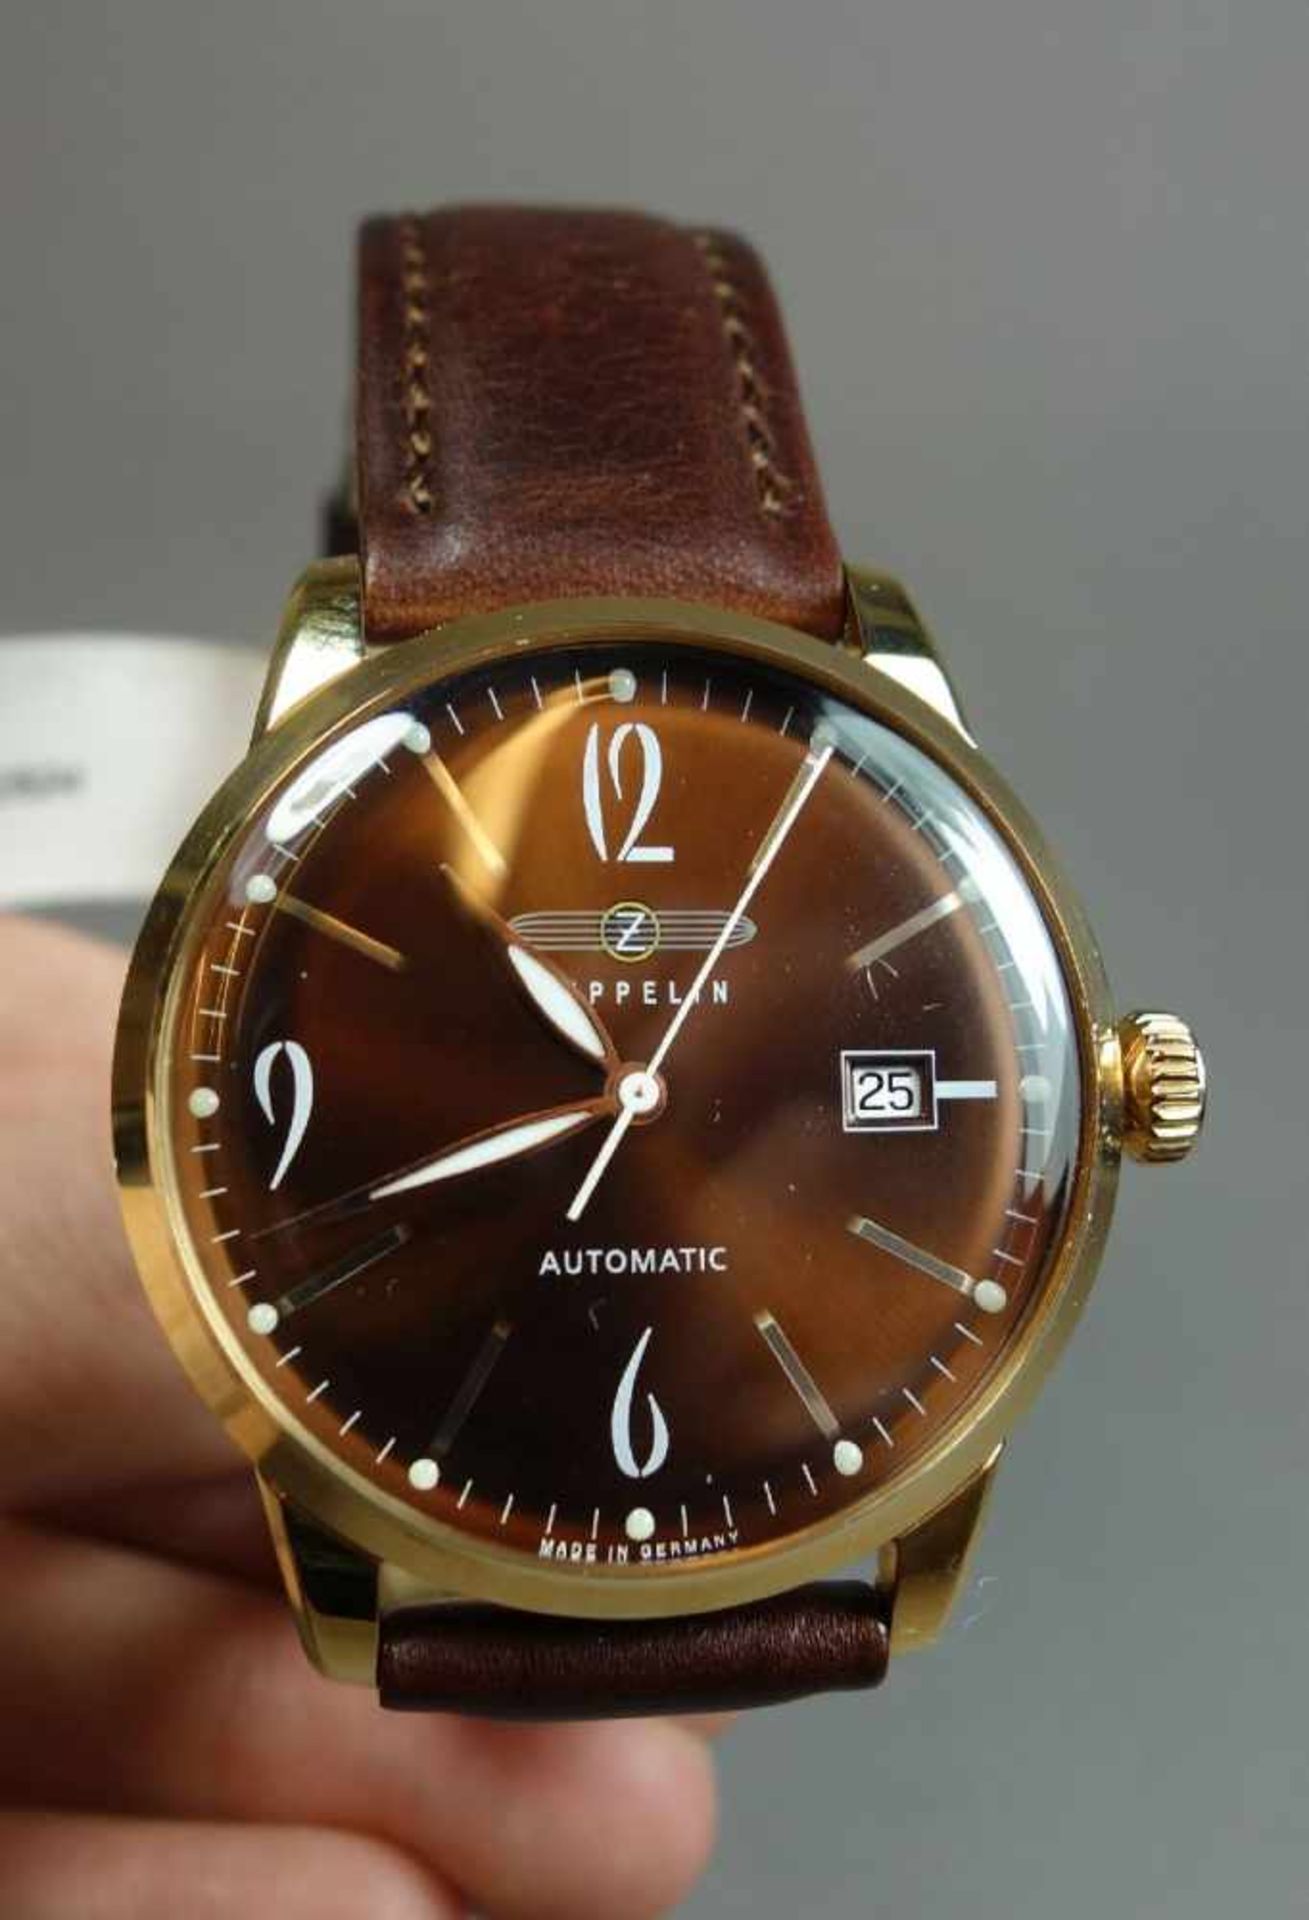 ZEPPELIN ARMBANDUHR / wristwatch, Automatik-Uhr, Manufaktur Point tec Electronic GmbH / Deutschland. - Image 2 of 7